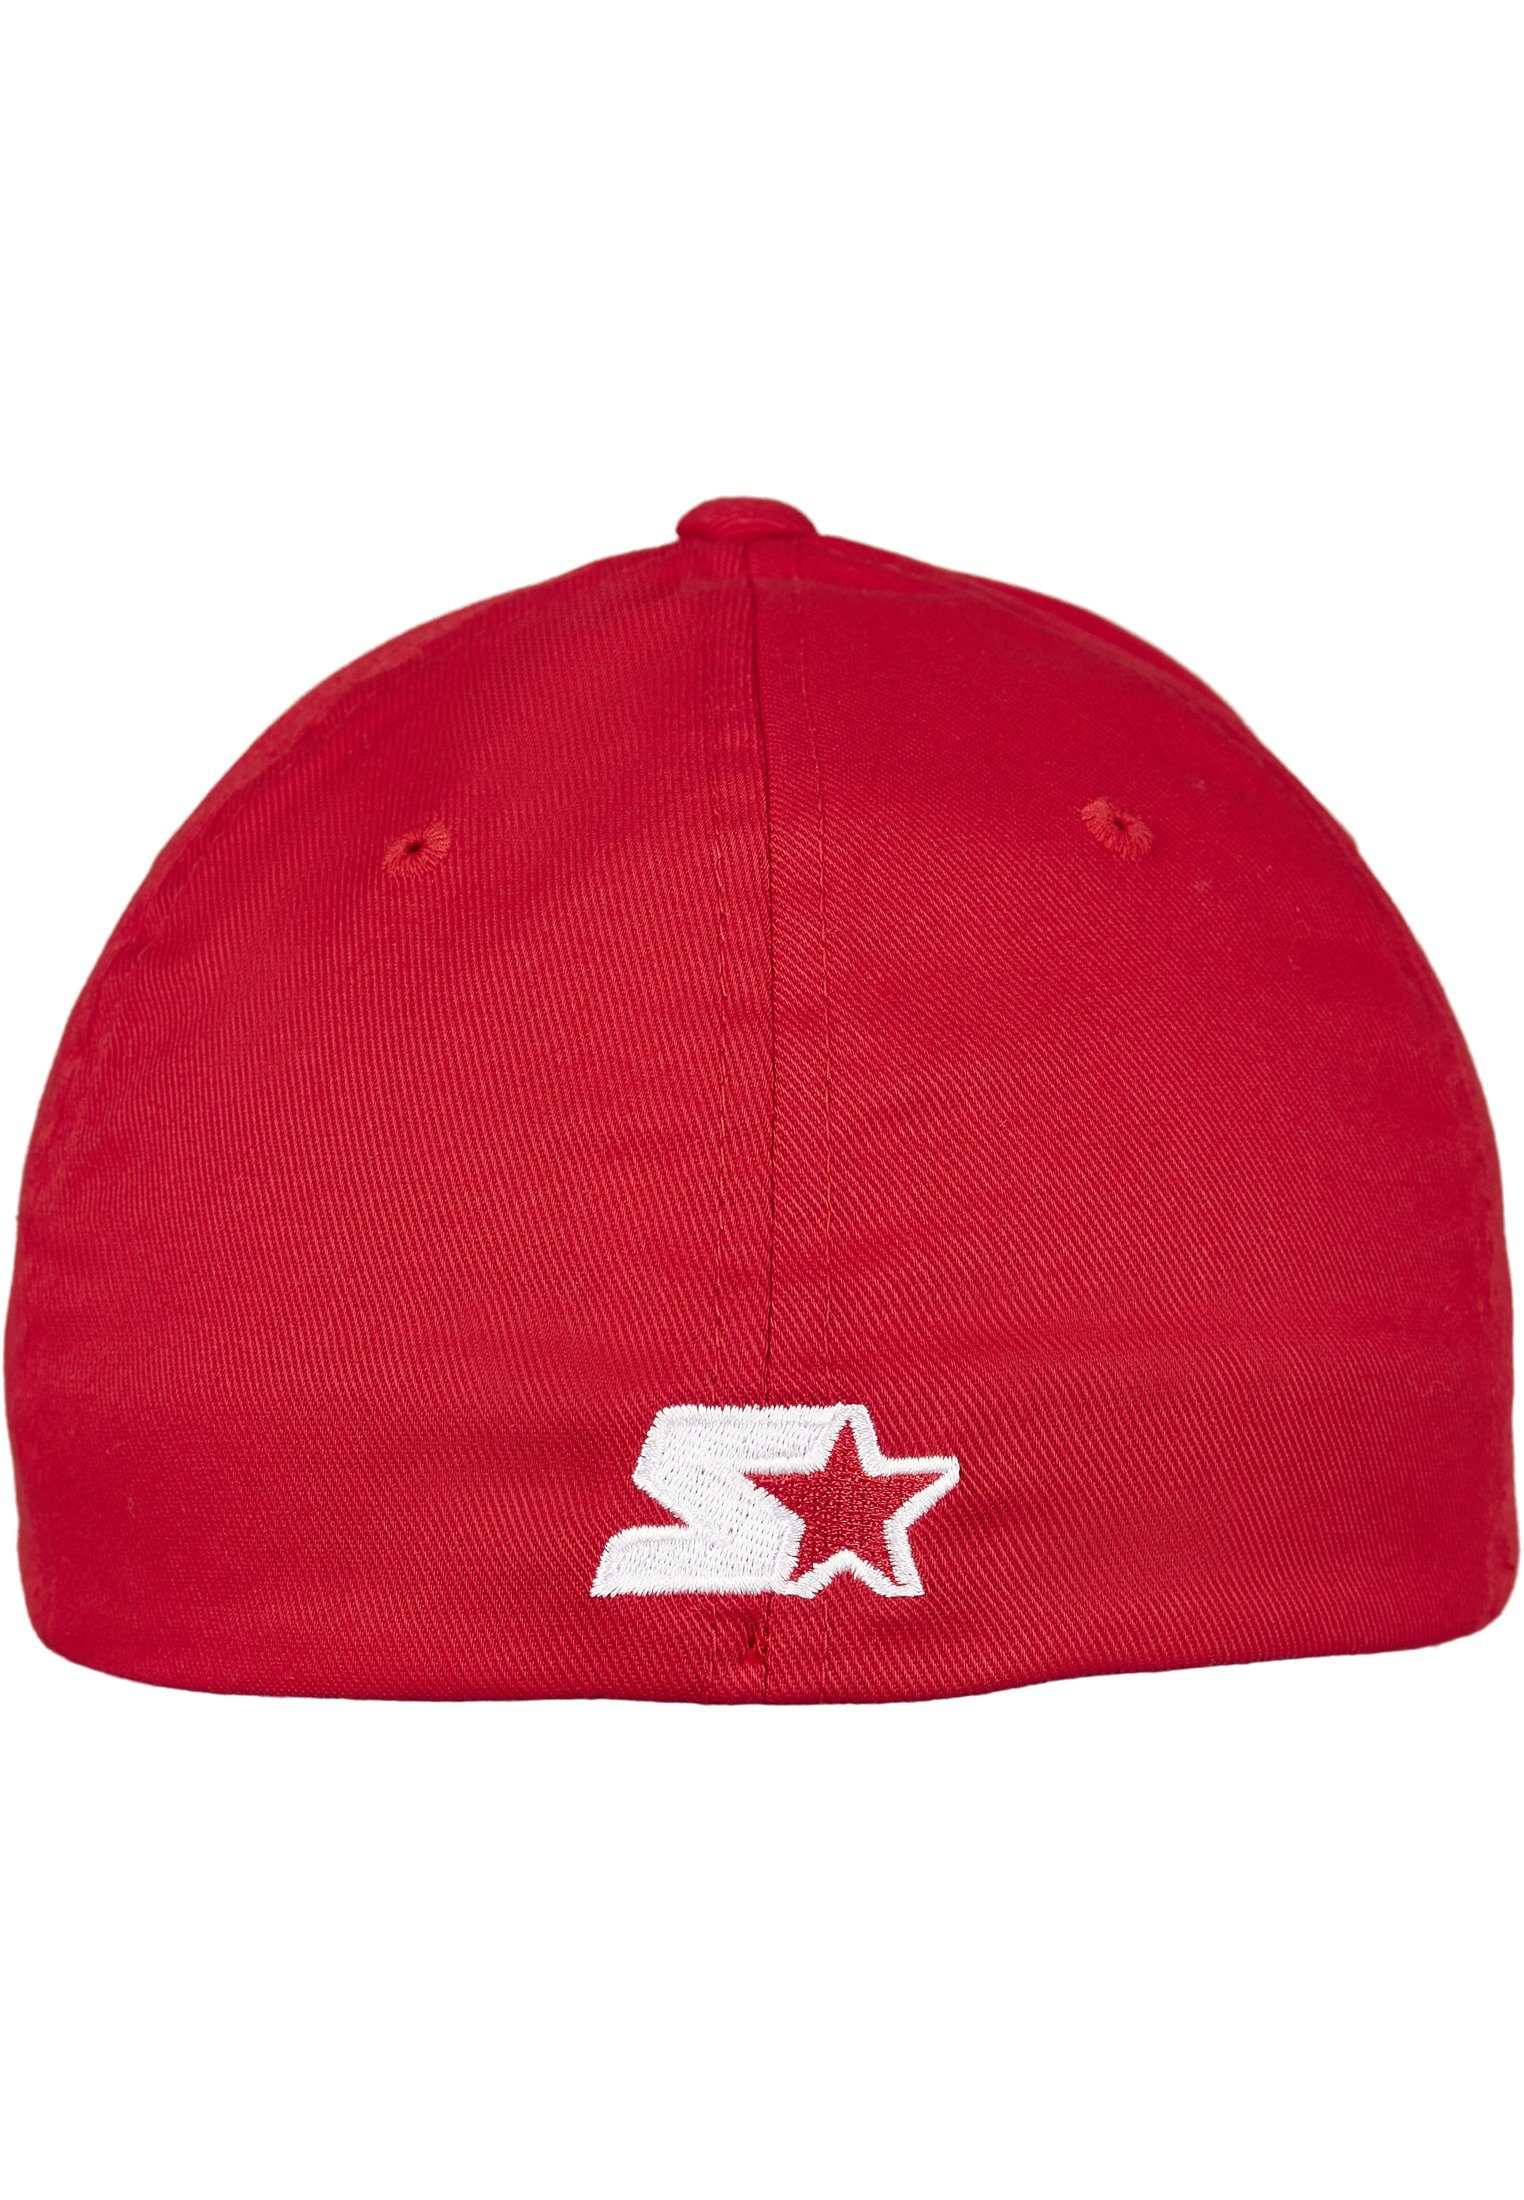 Label Cap Flex Black Starter Flexfit red Starter Chicago Herren Cap